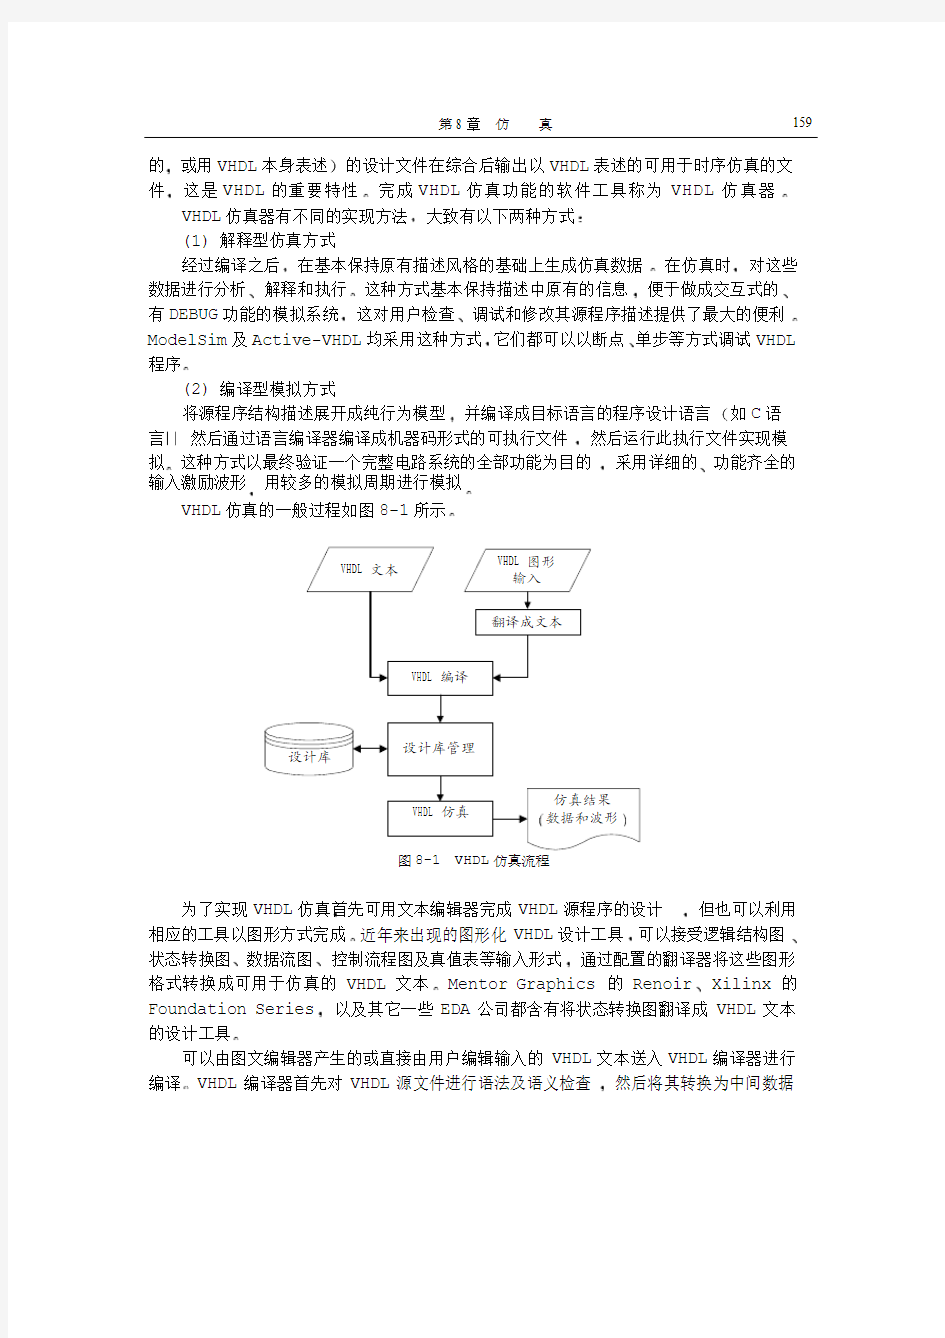 《VHDL实用教程》完整版【汉语版】-10第八章